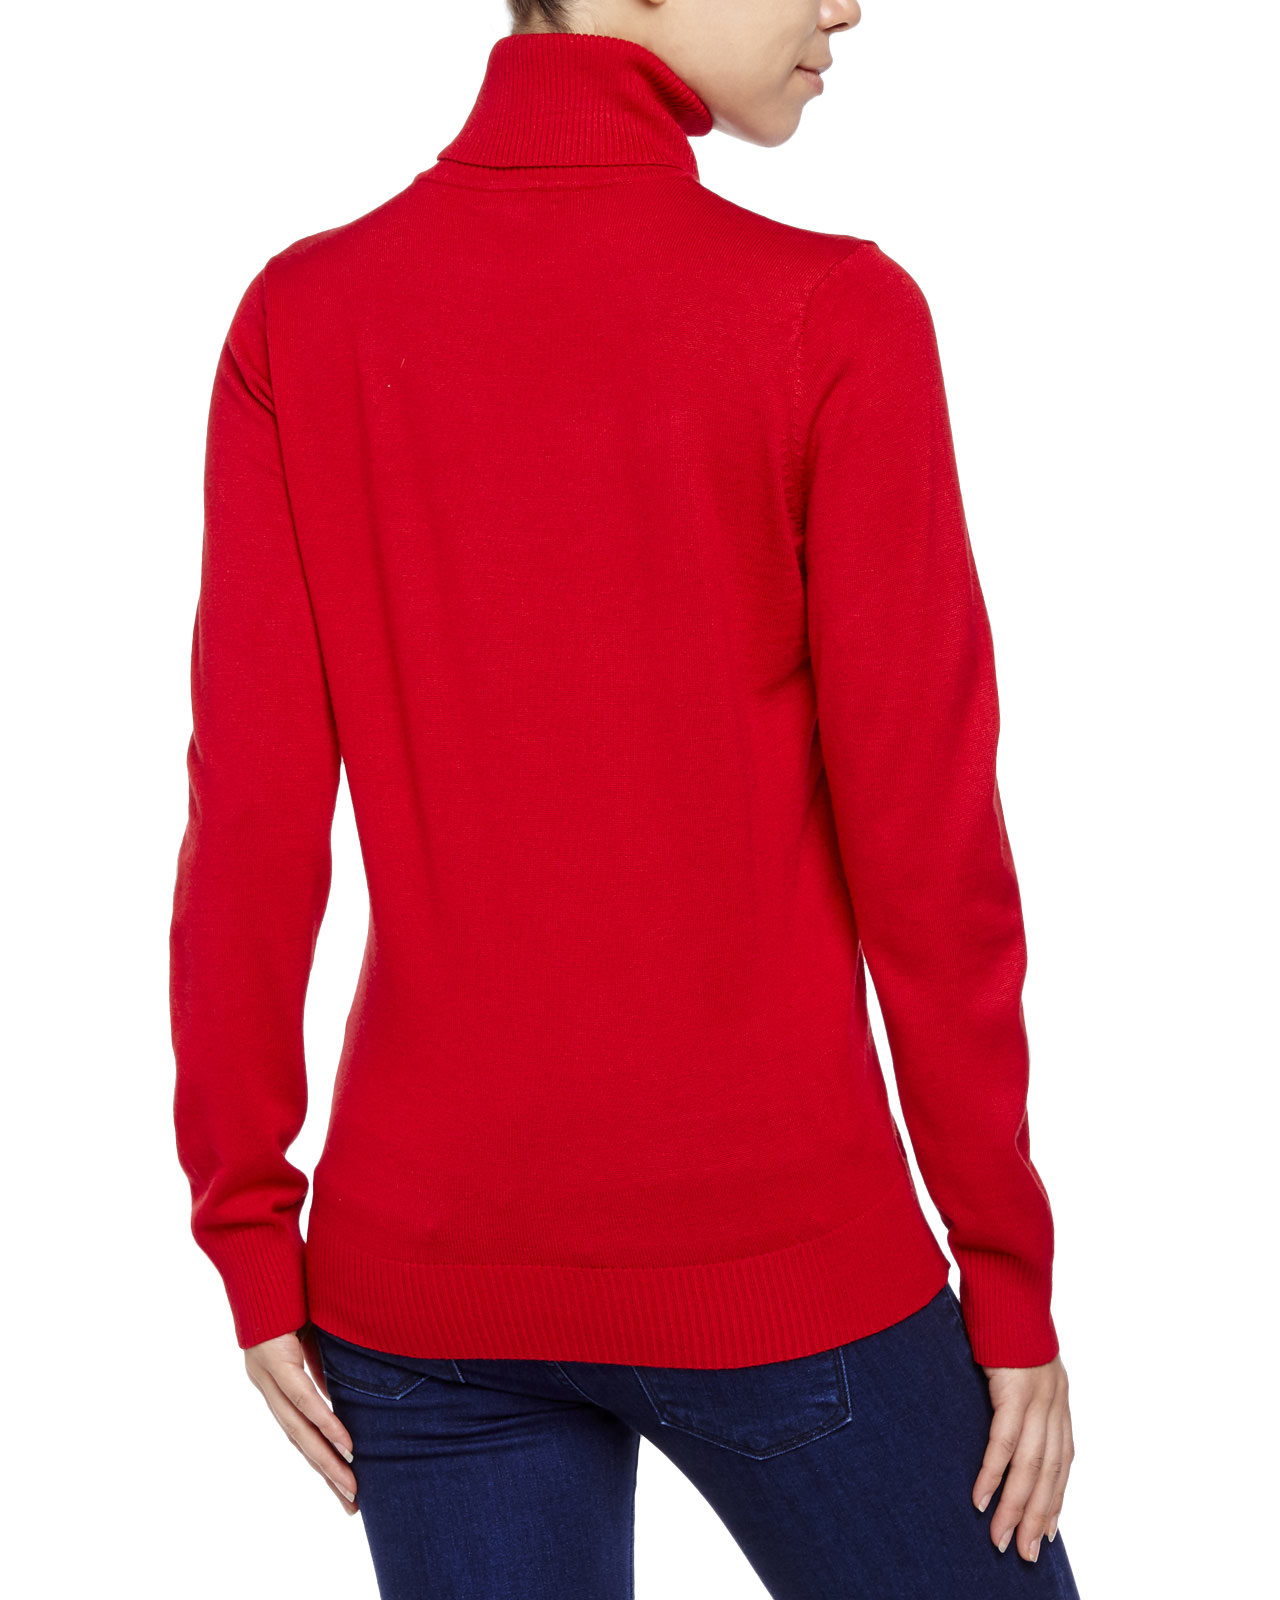 Joseph A Turtleneck Sweater in Red - Lyst